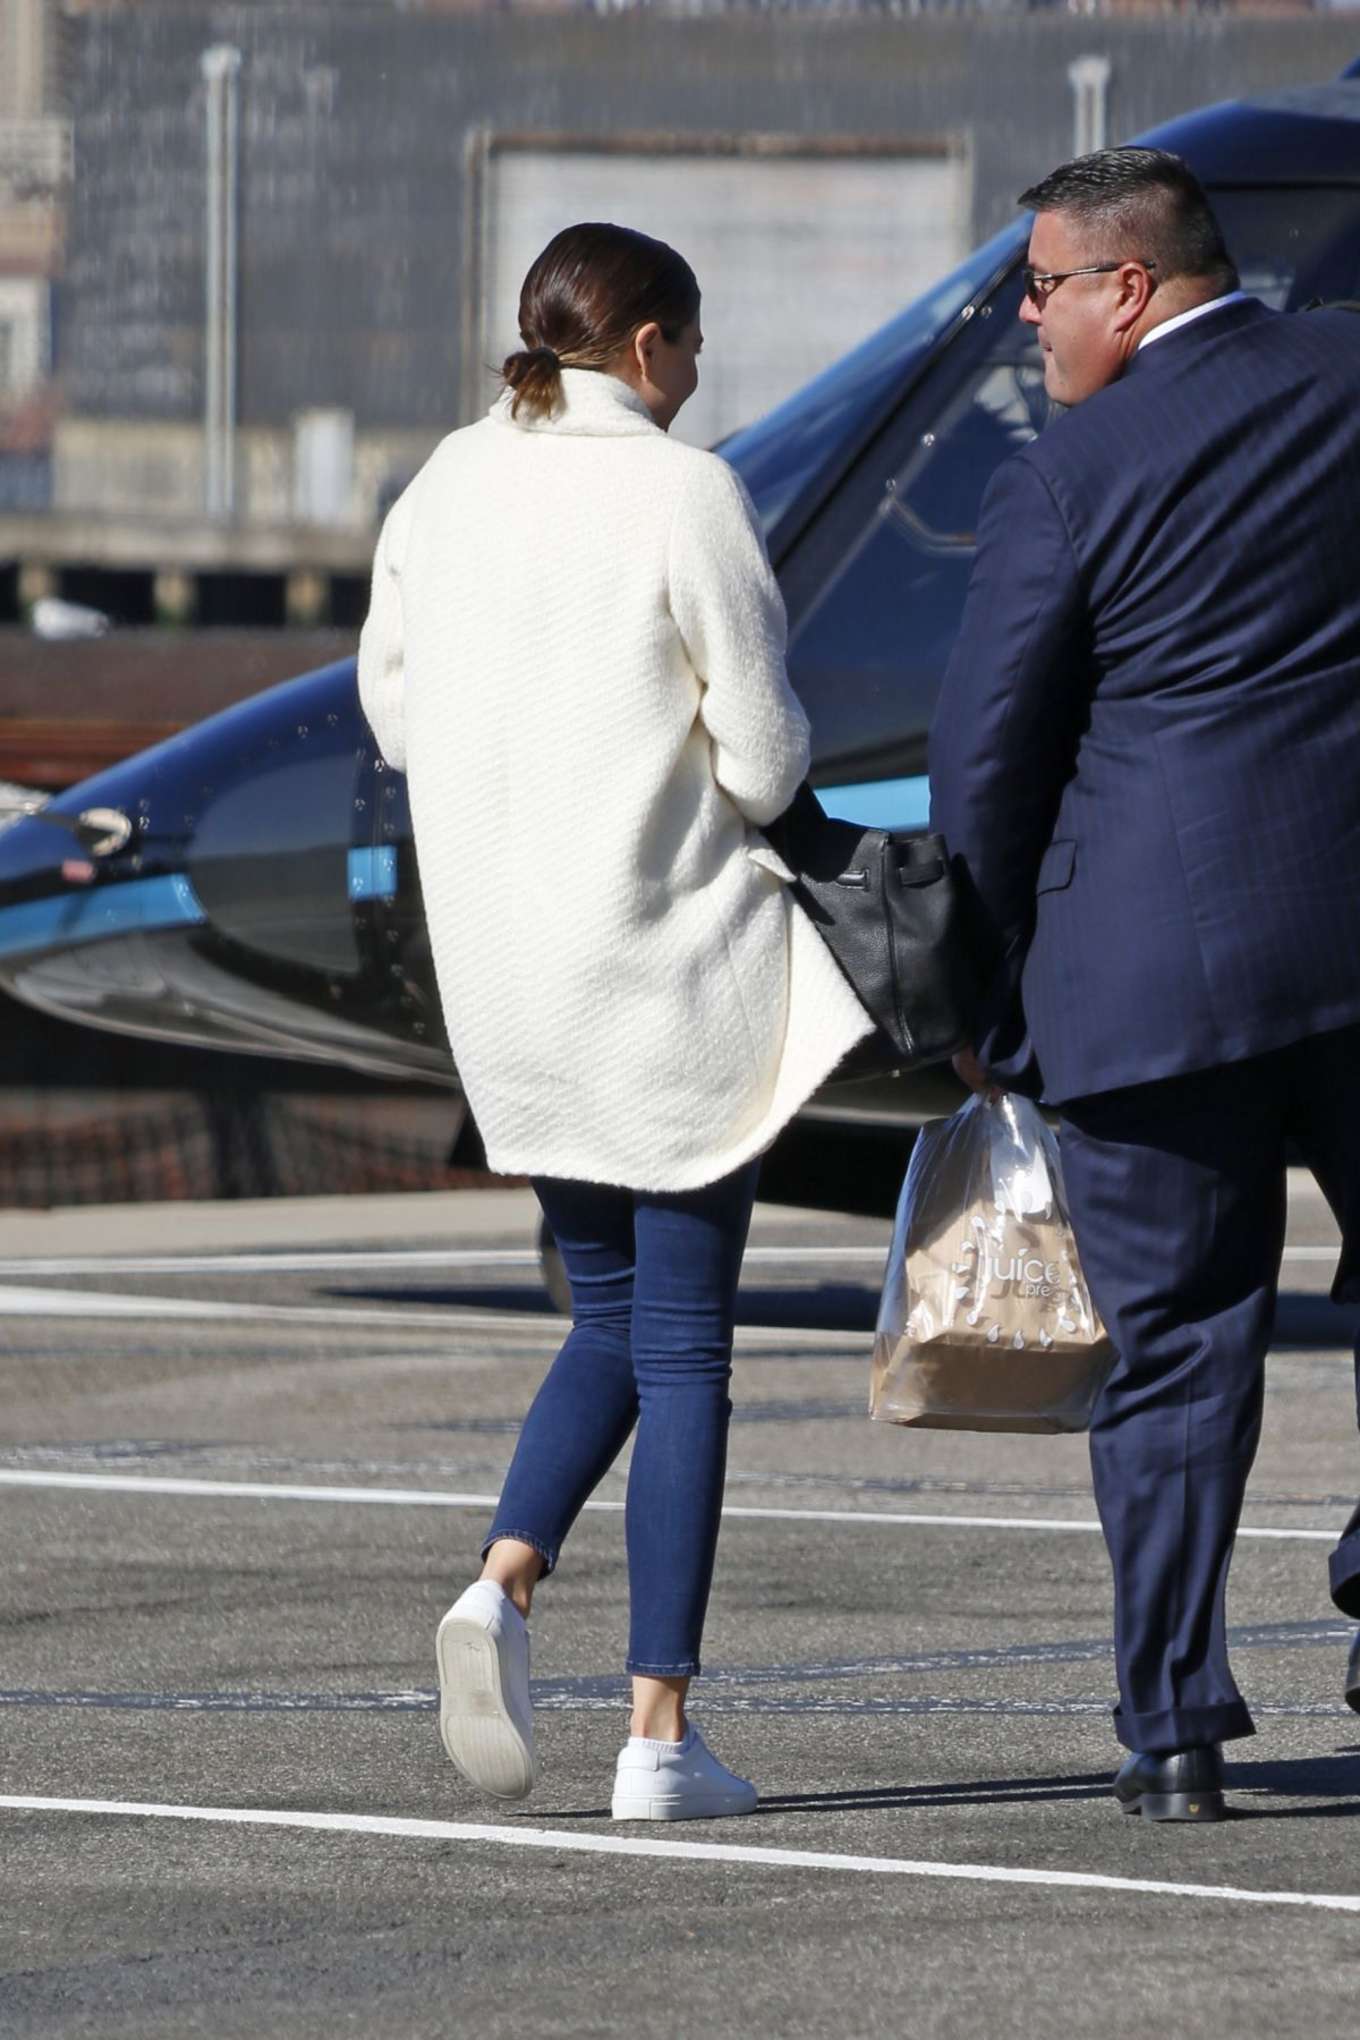 Miranda Kerr in Jeans Leaving New York